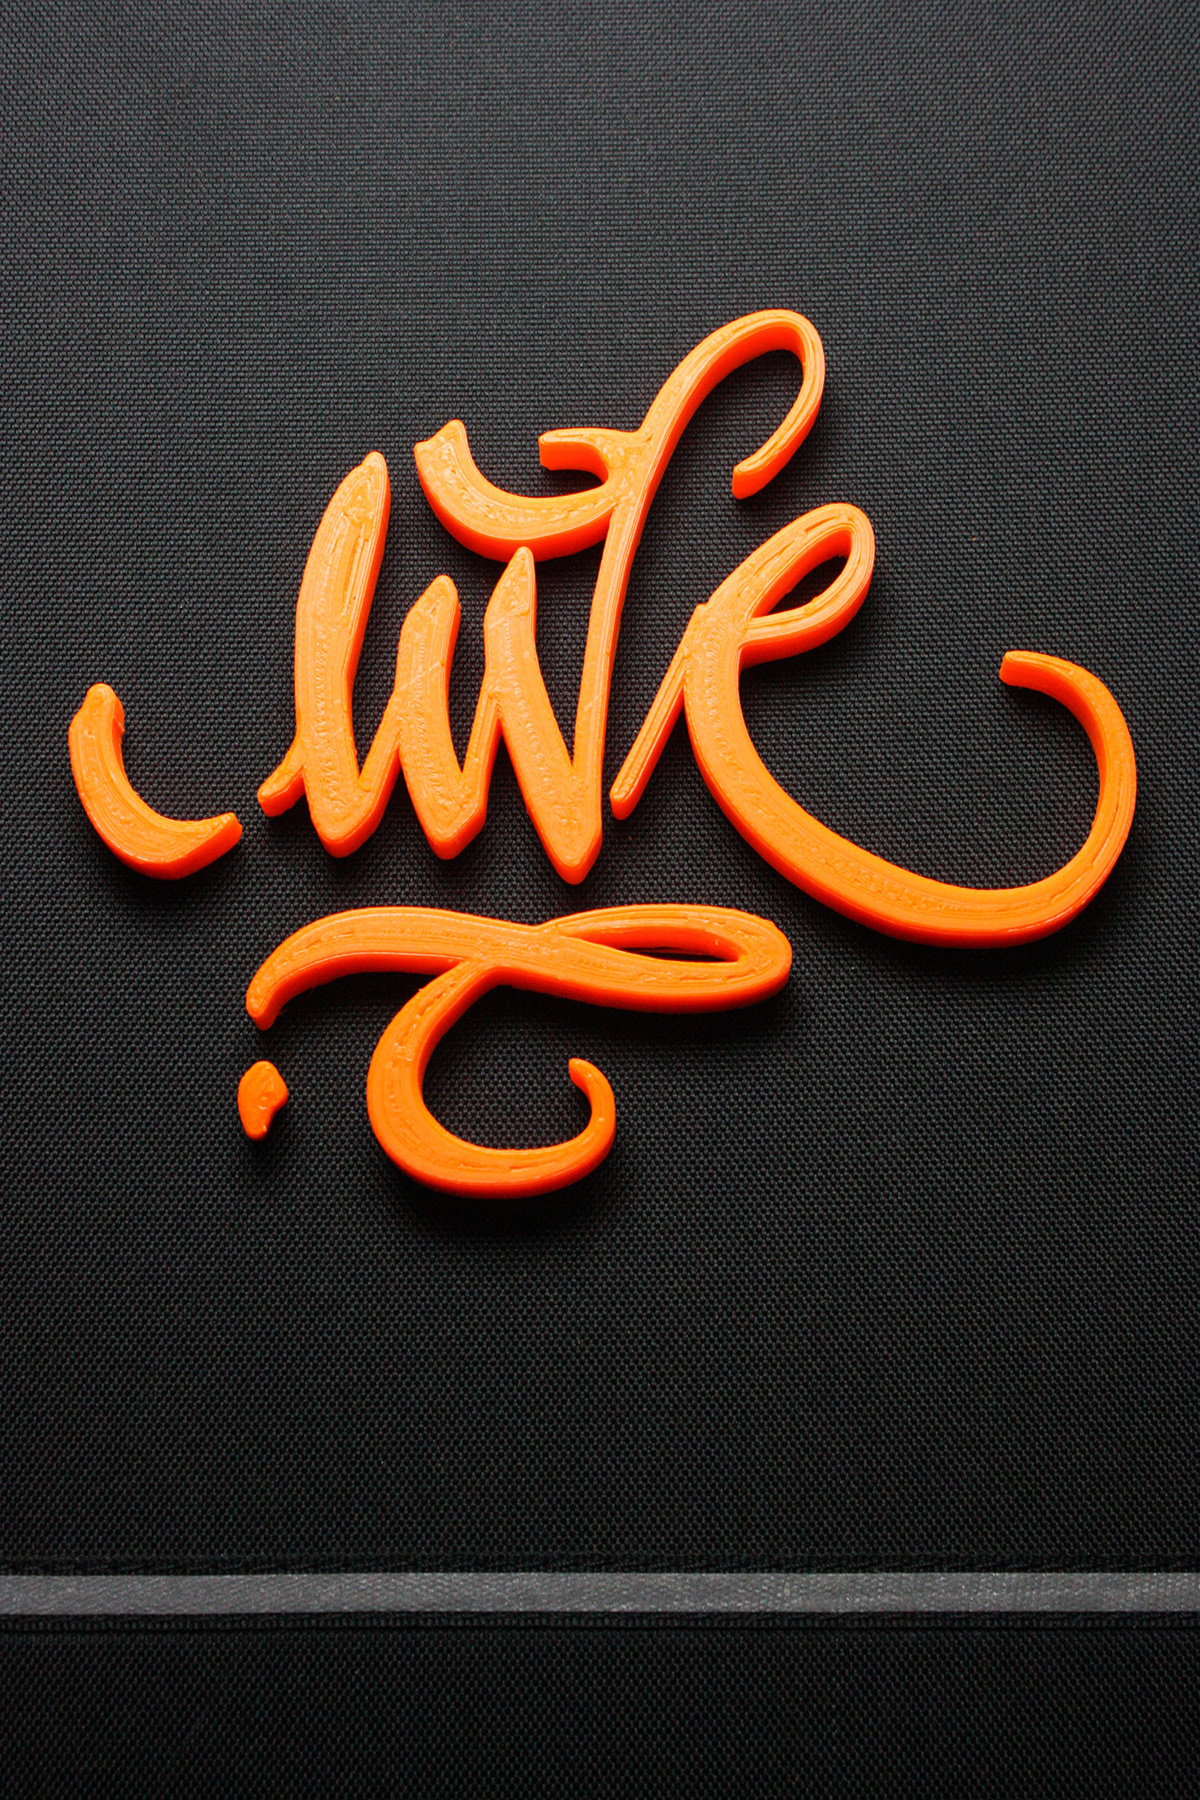 irinel papuc Typomonger 3d printing orange live 3D typo HAND LETTERING logo